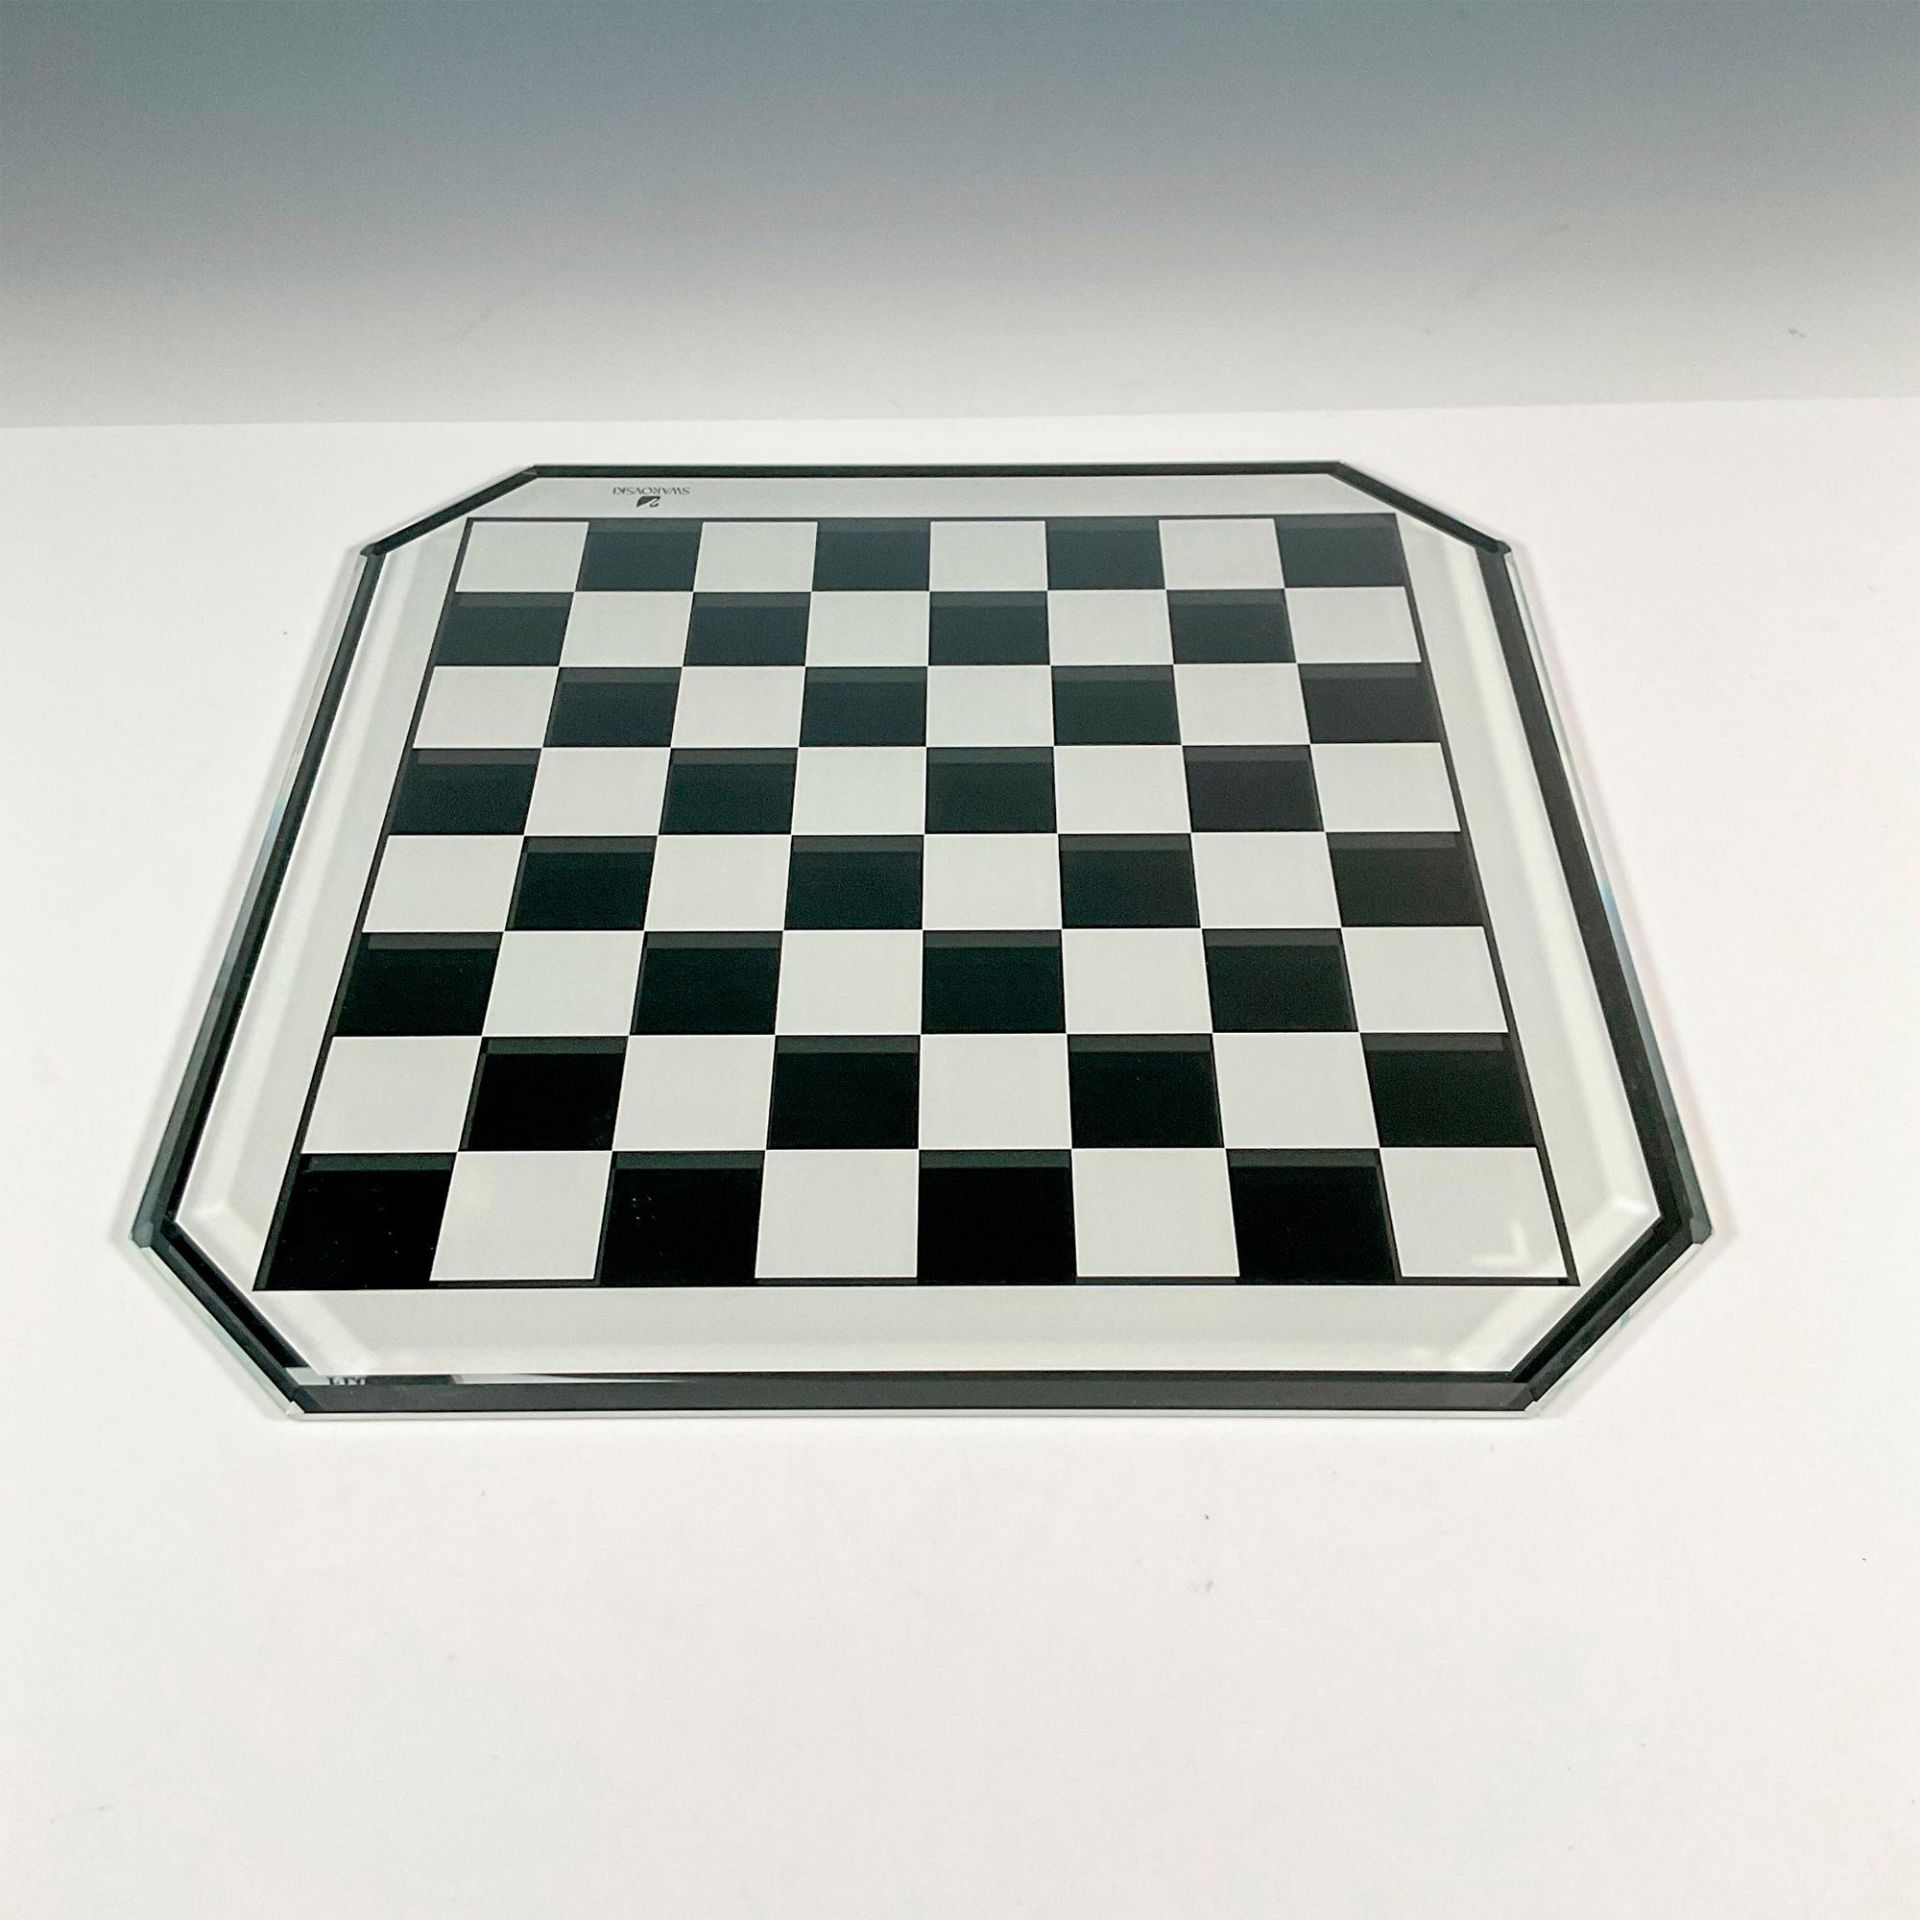 33pc Swarovski Silver Crystal Chess Set - Image 3 of 5